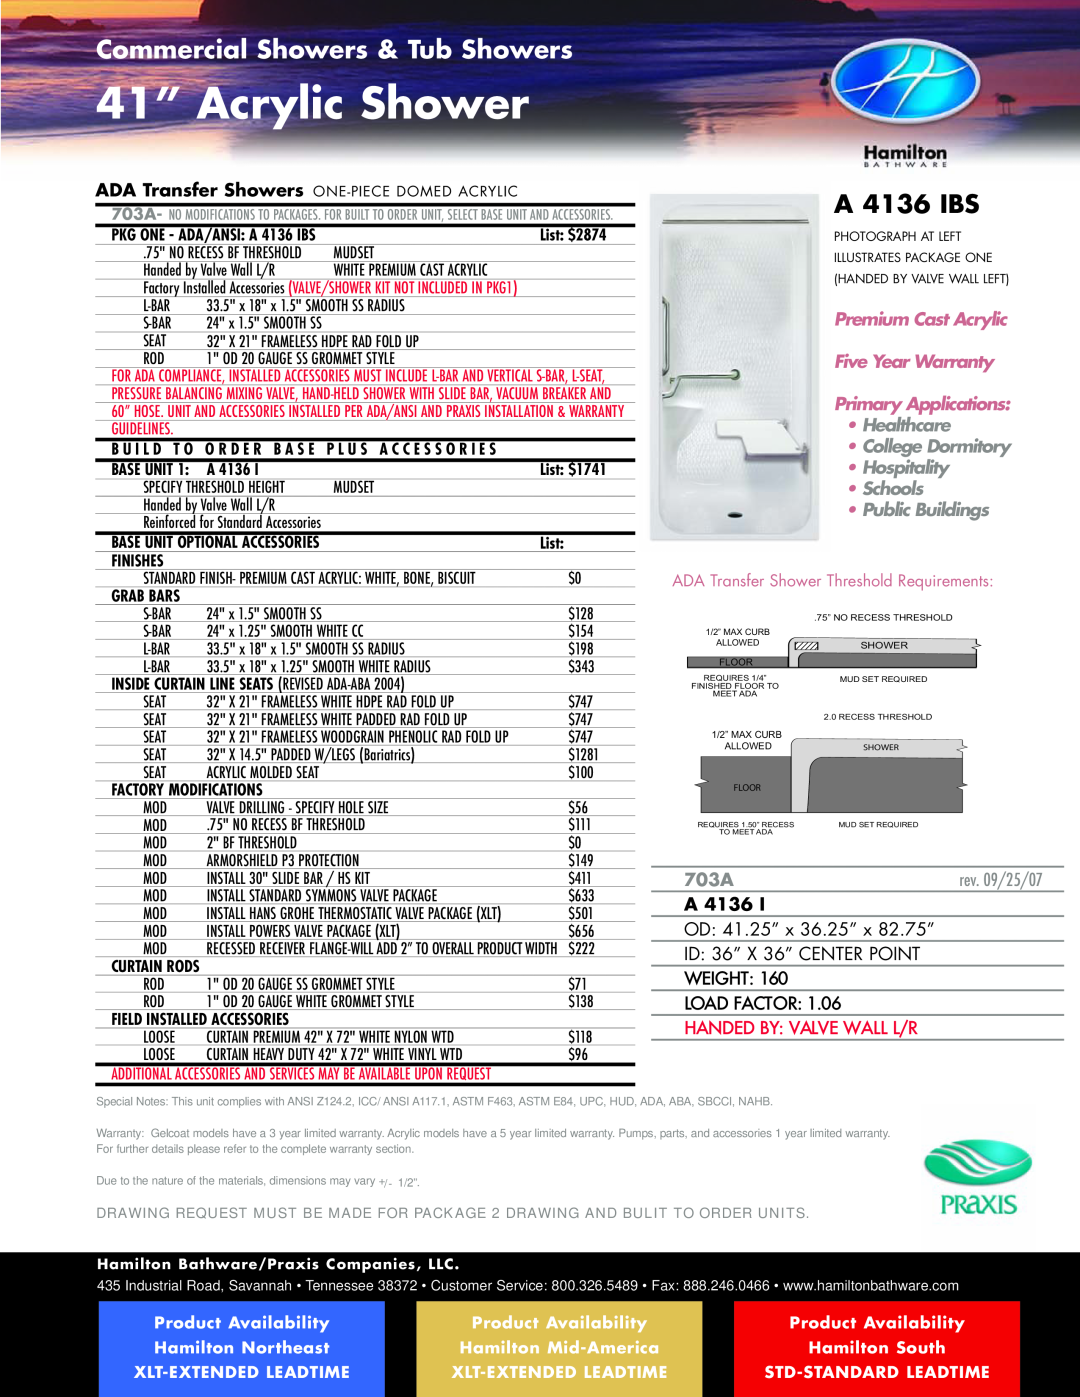 Hamilton Electronics A 6436 IBS 41” Acrylic Shower, A 4136 IBS, • Public Buildings, rev. 09/25/07, 703A, List: $2874 